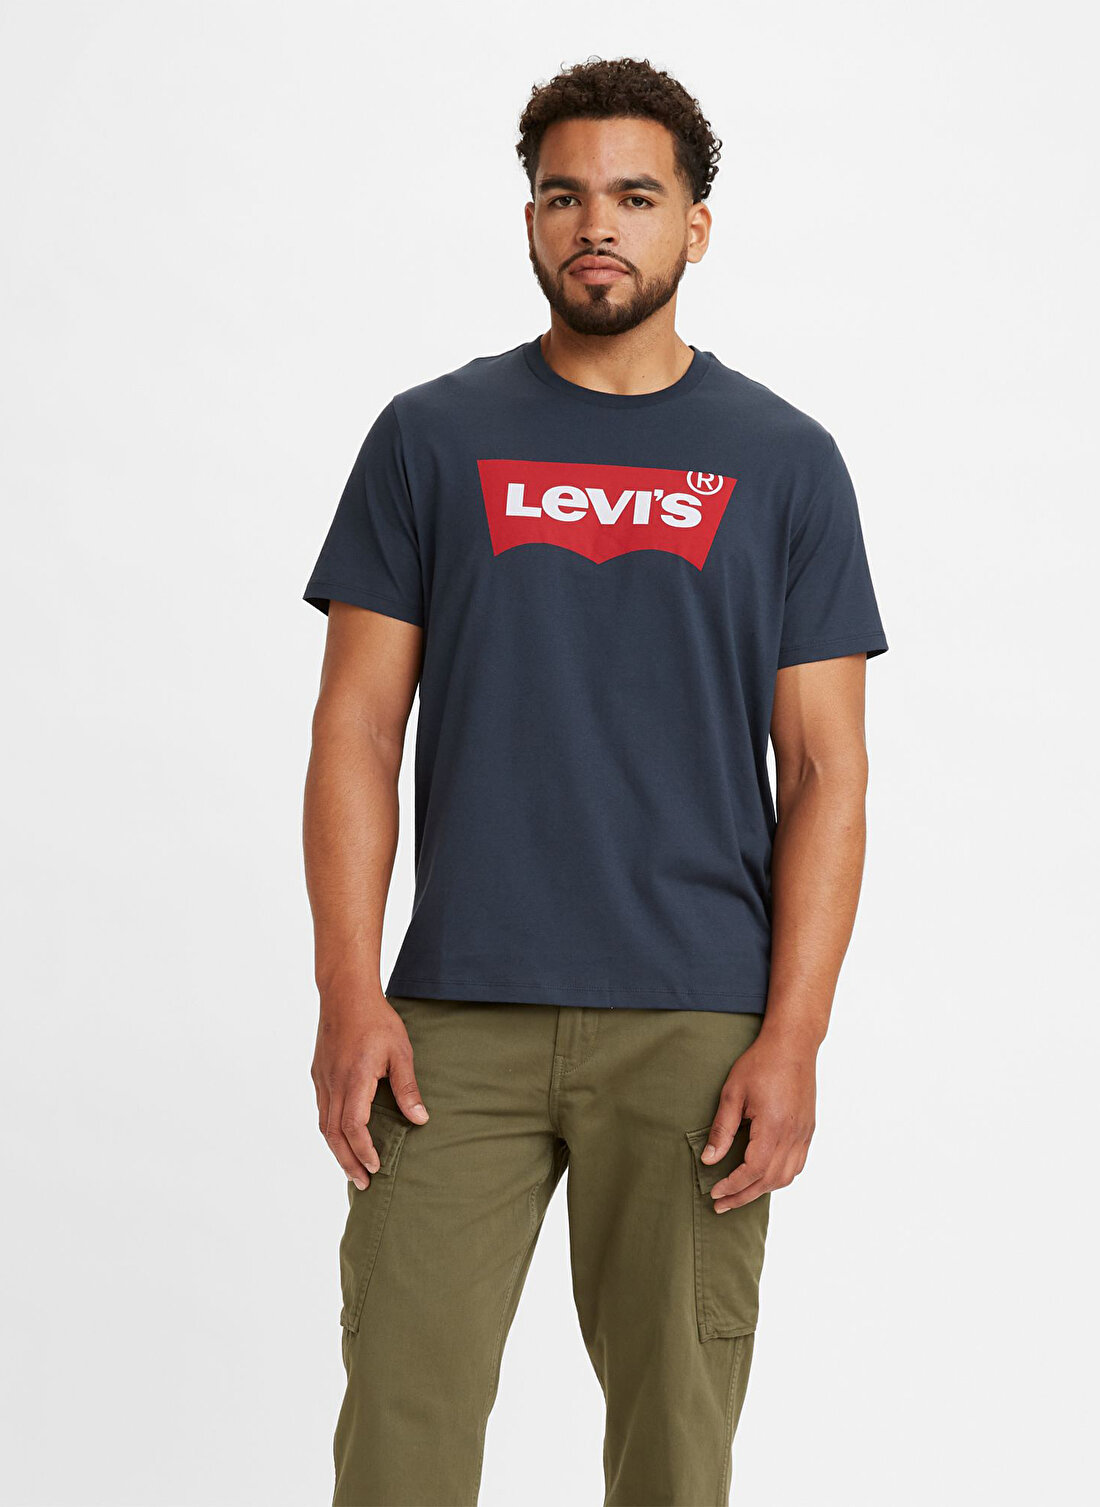 Levis Erkek Lacivert Bisiklet Yaka T-Shirt